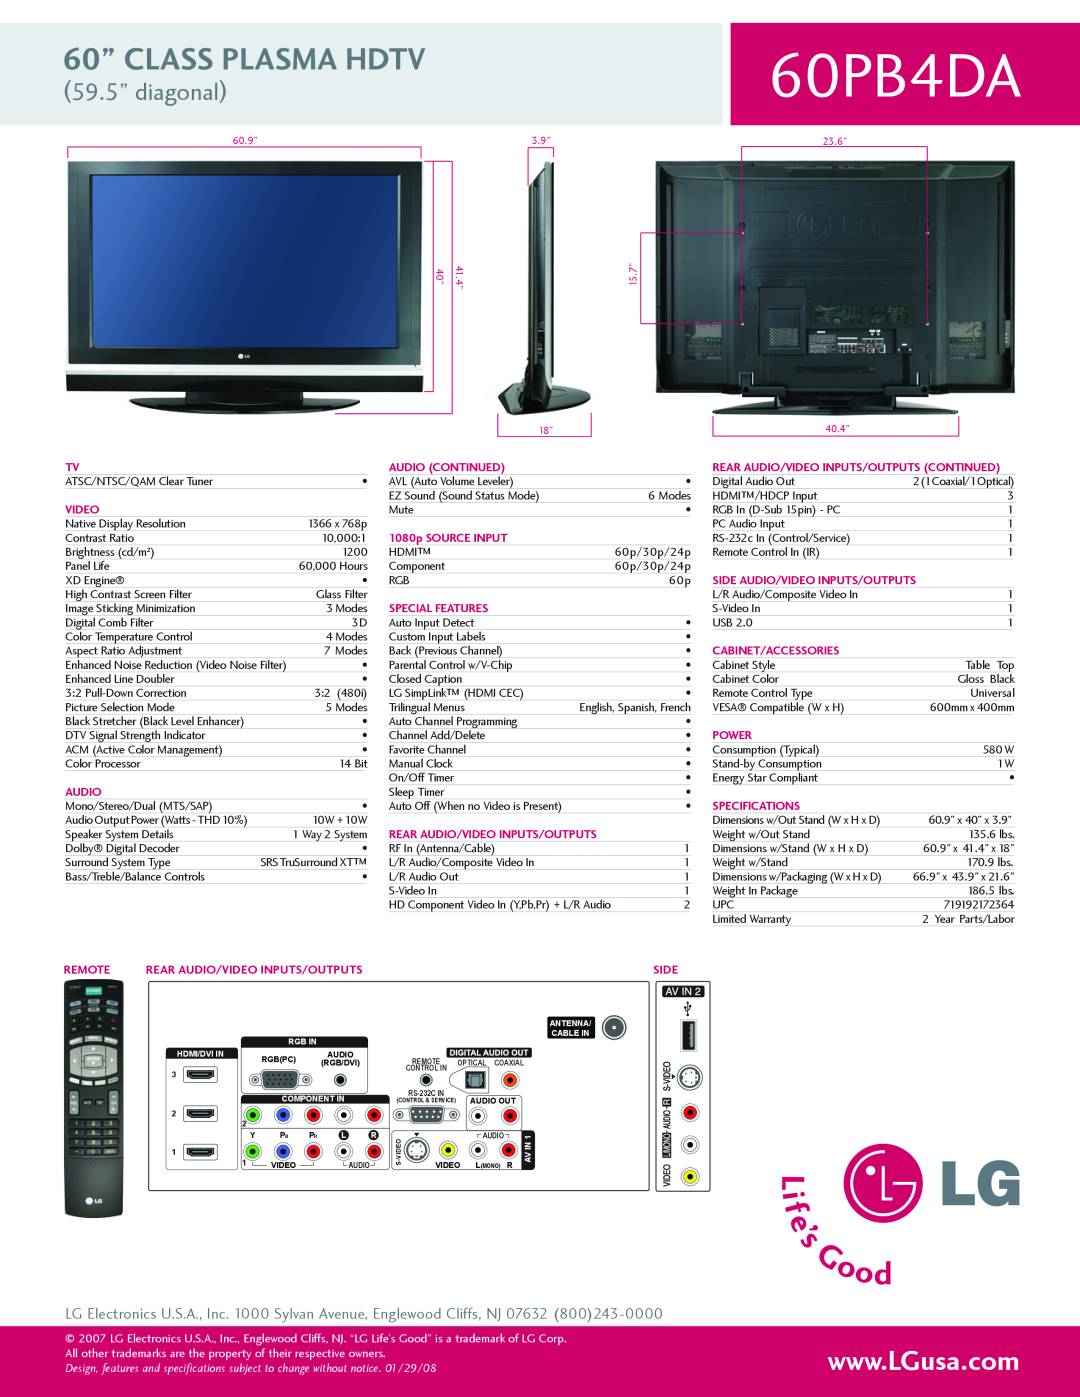 LG Electronics 60PB4DA manual 60” CLASS PLASMA HDTV, 59.5” diagonal 